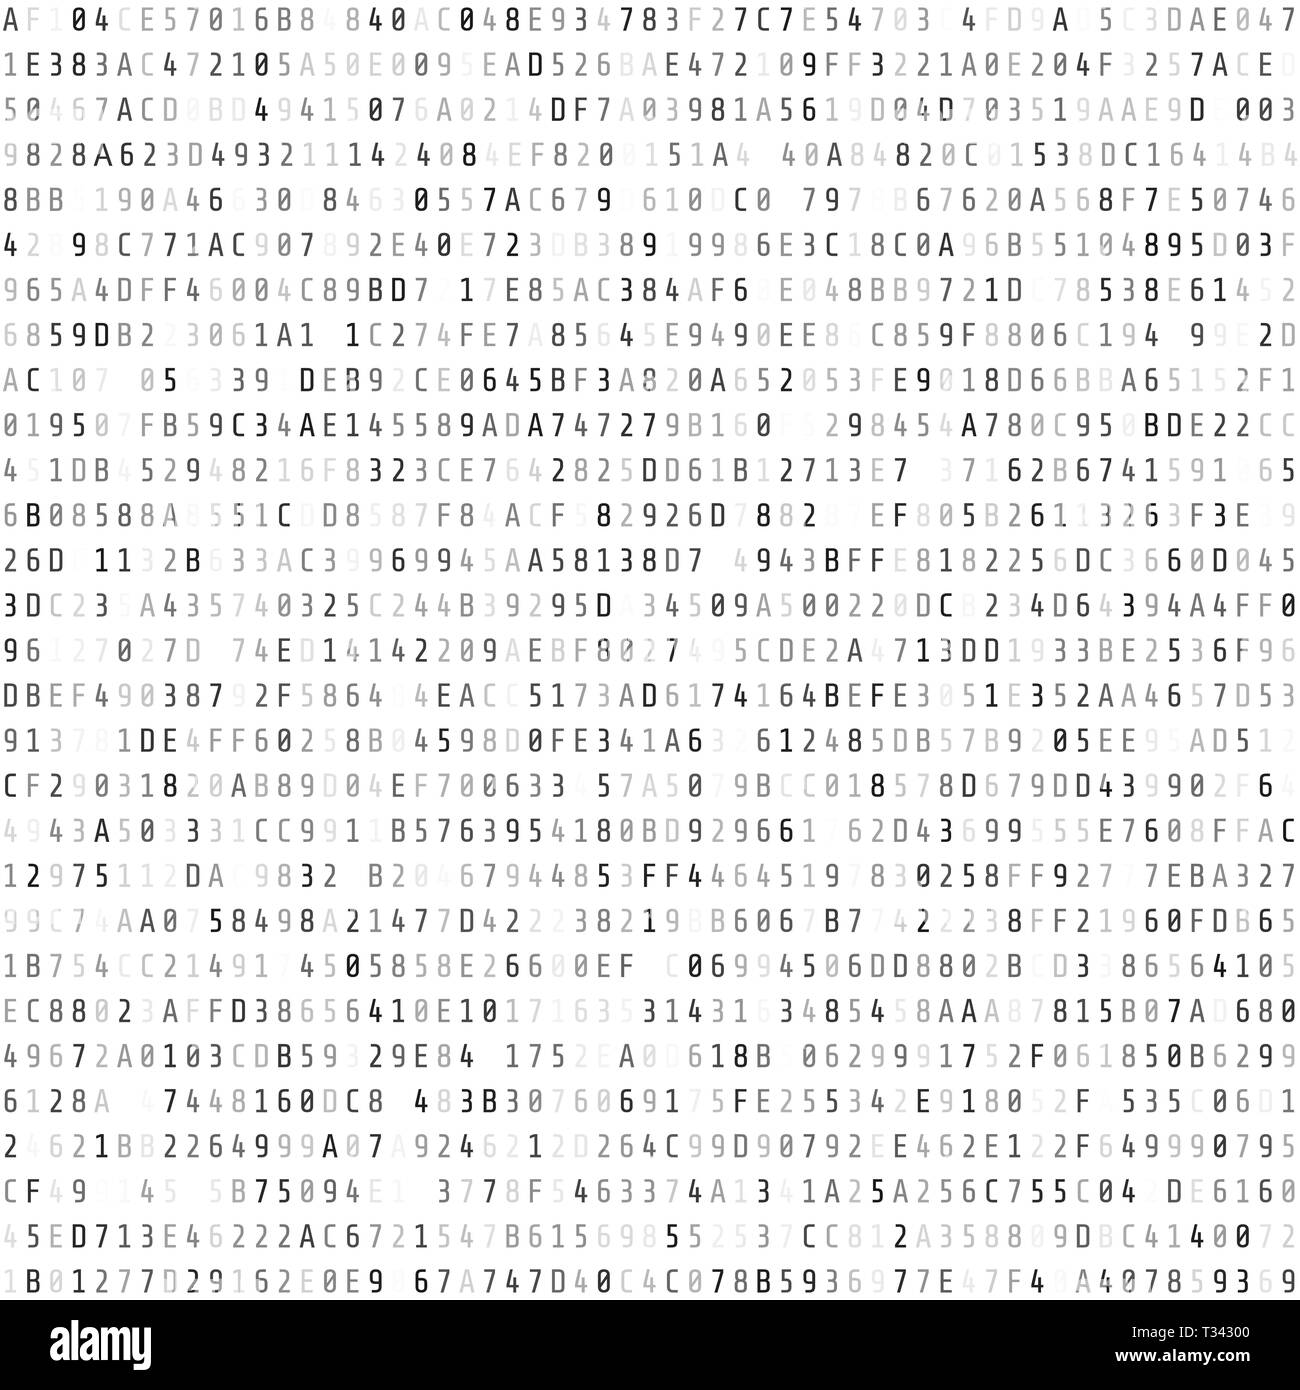 Random Hex Code Stream. Abstract digital data element. Matrix background. Vector illustration isolated on white Stock Vector